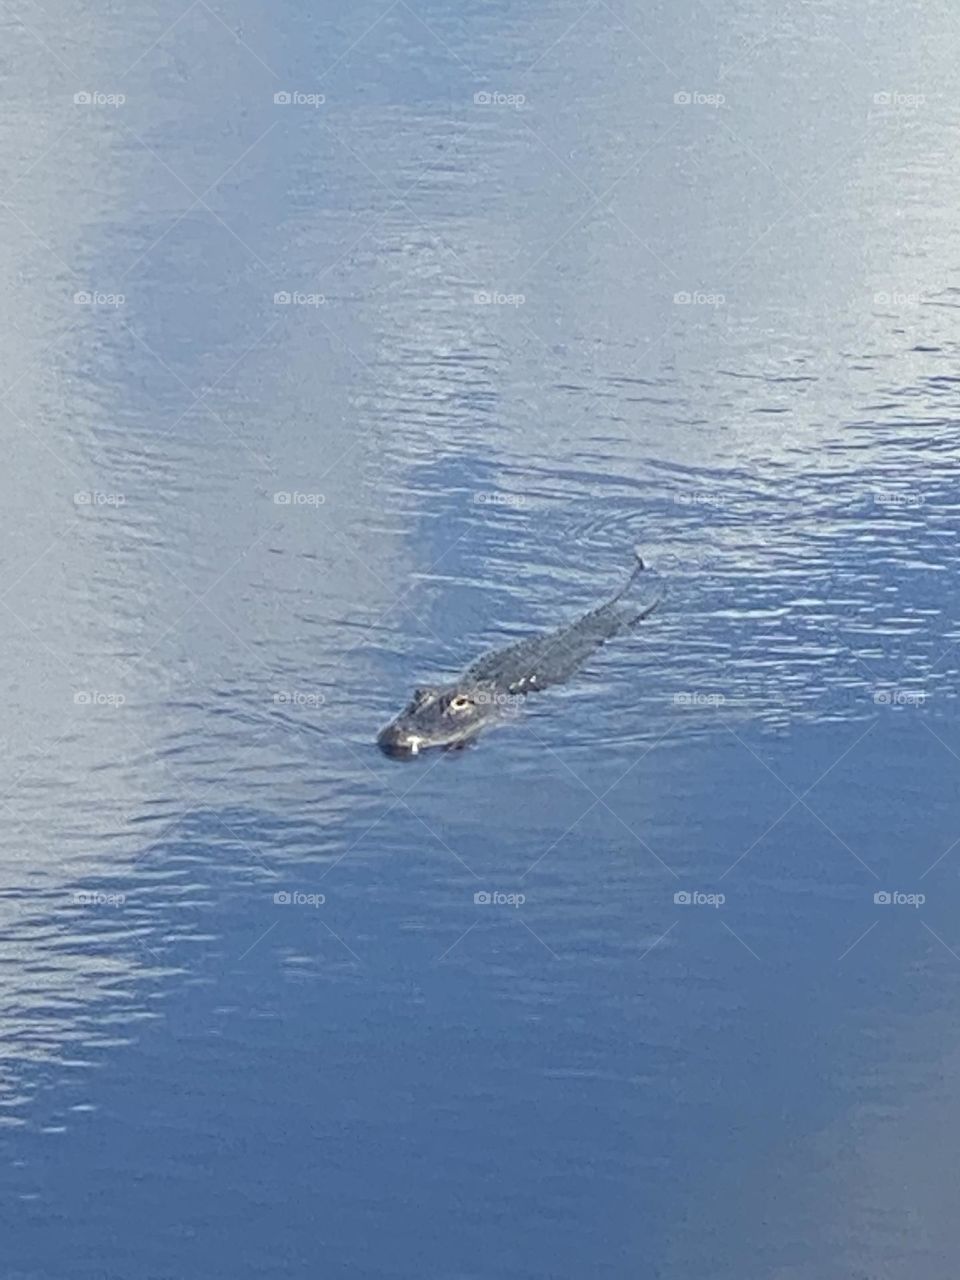 Alligator in a Florida lake. 